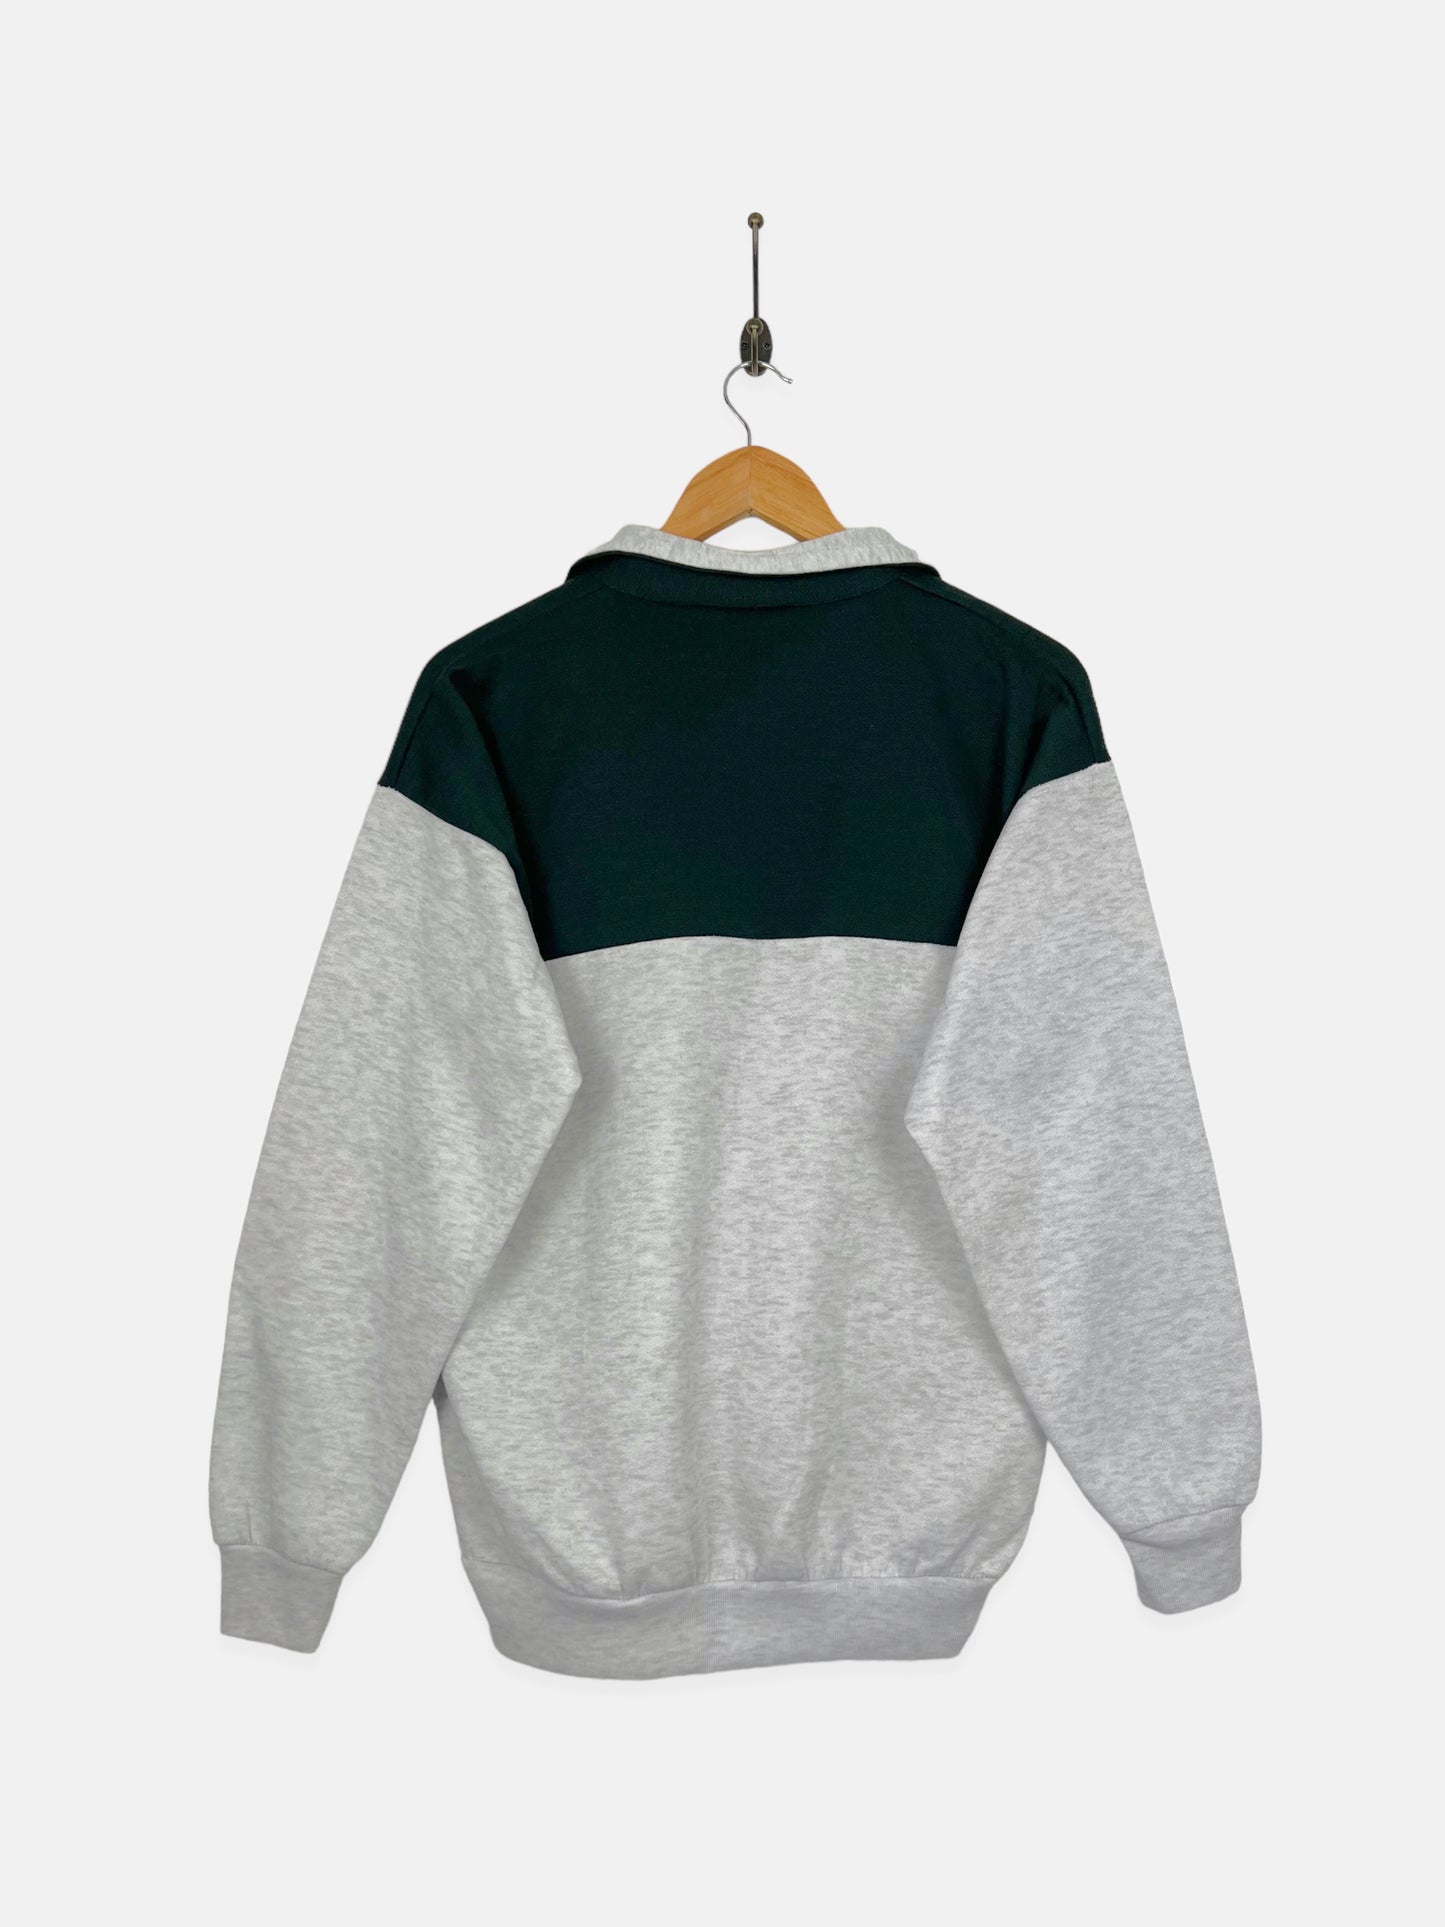 90'S Alaska USA Made Vintage Quarterzip Sweatshirt Size 10